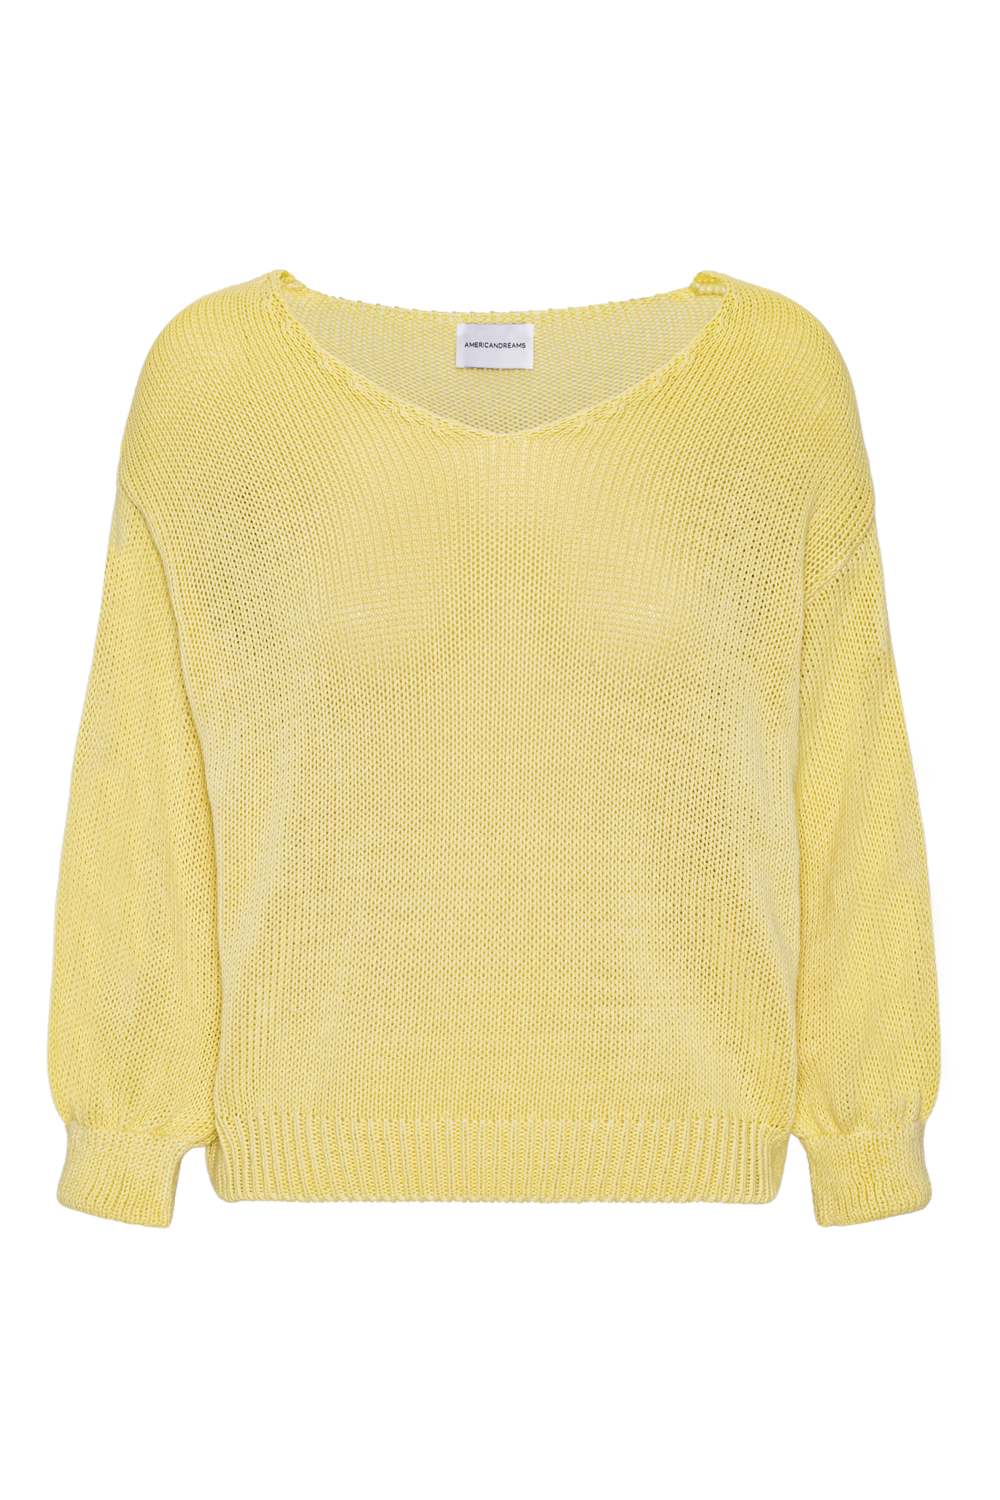 Milana LS Light Cotton Knit Light Yellow